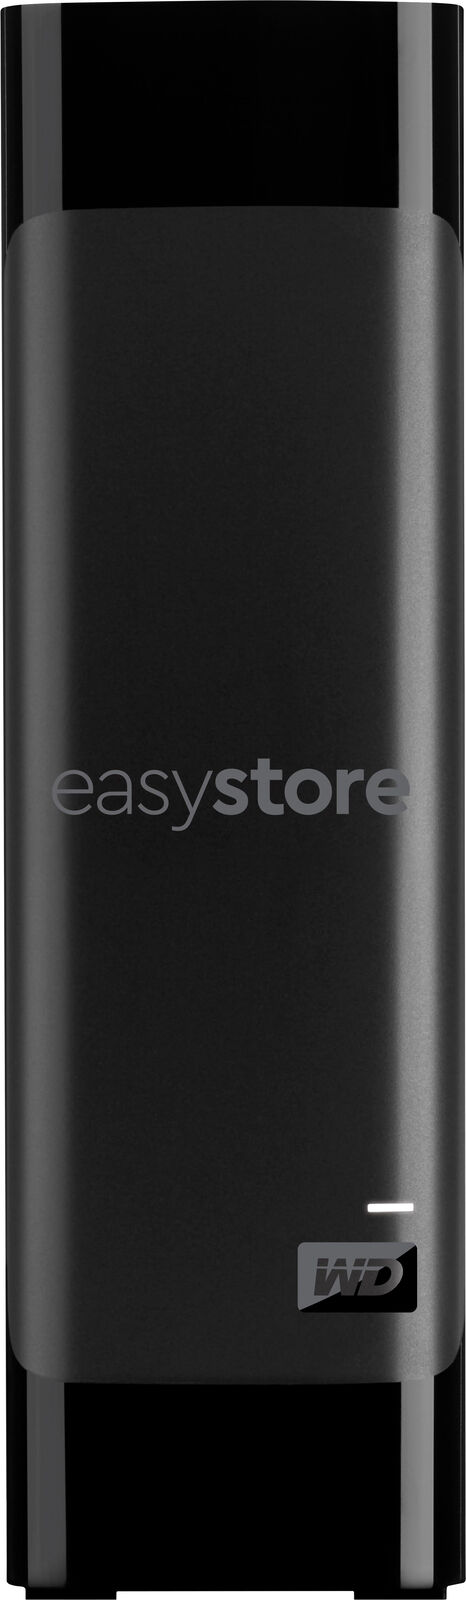 WD - easystore 20TB External USB 3.0 Hard Drive - Black